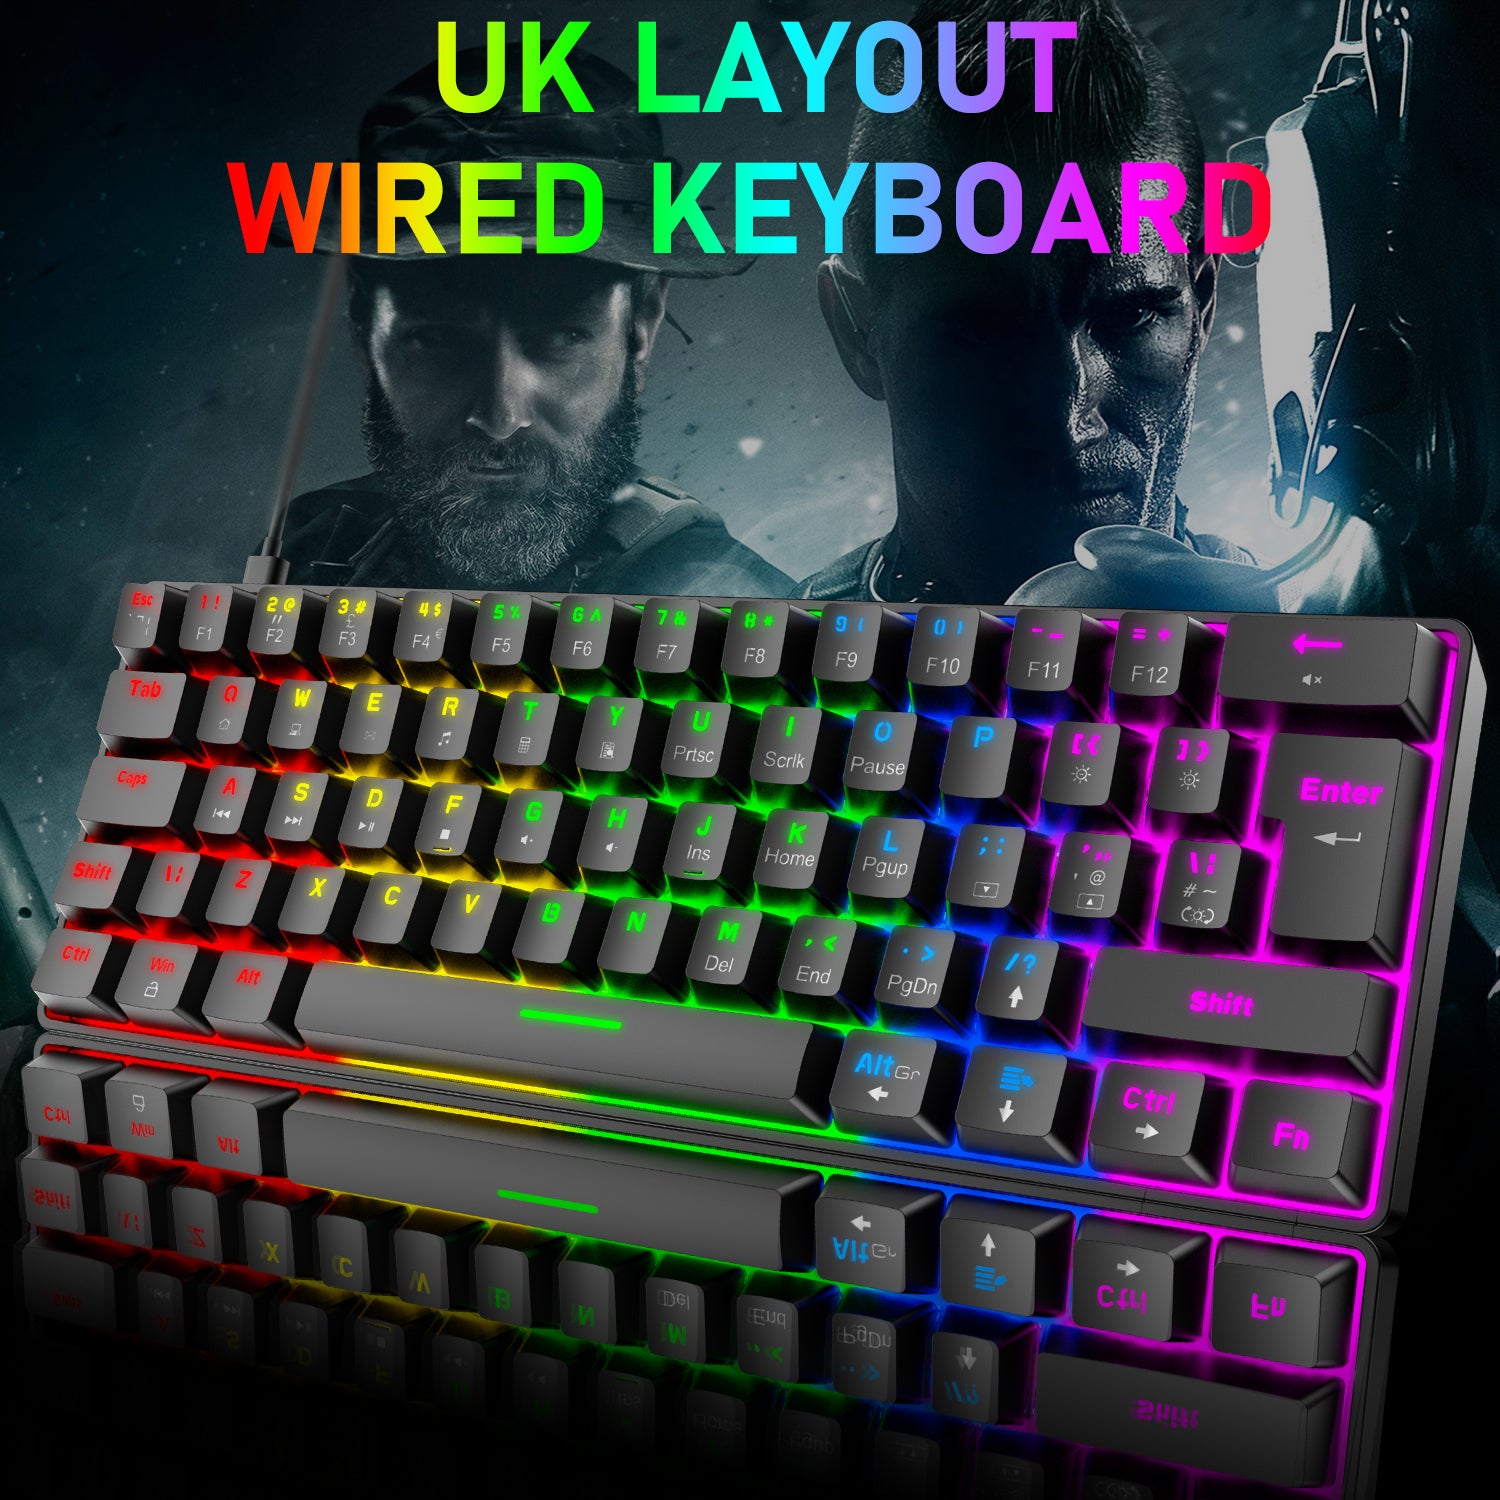 ZIYOU LANG T60 Mini 60% Percent Gaming Mechanical Keyboard UK Layout 19 Rainbow Light Up Compact Keyboard USB-C Cable for PC MAC